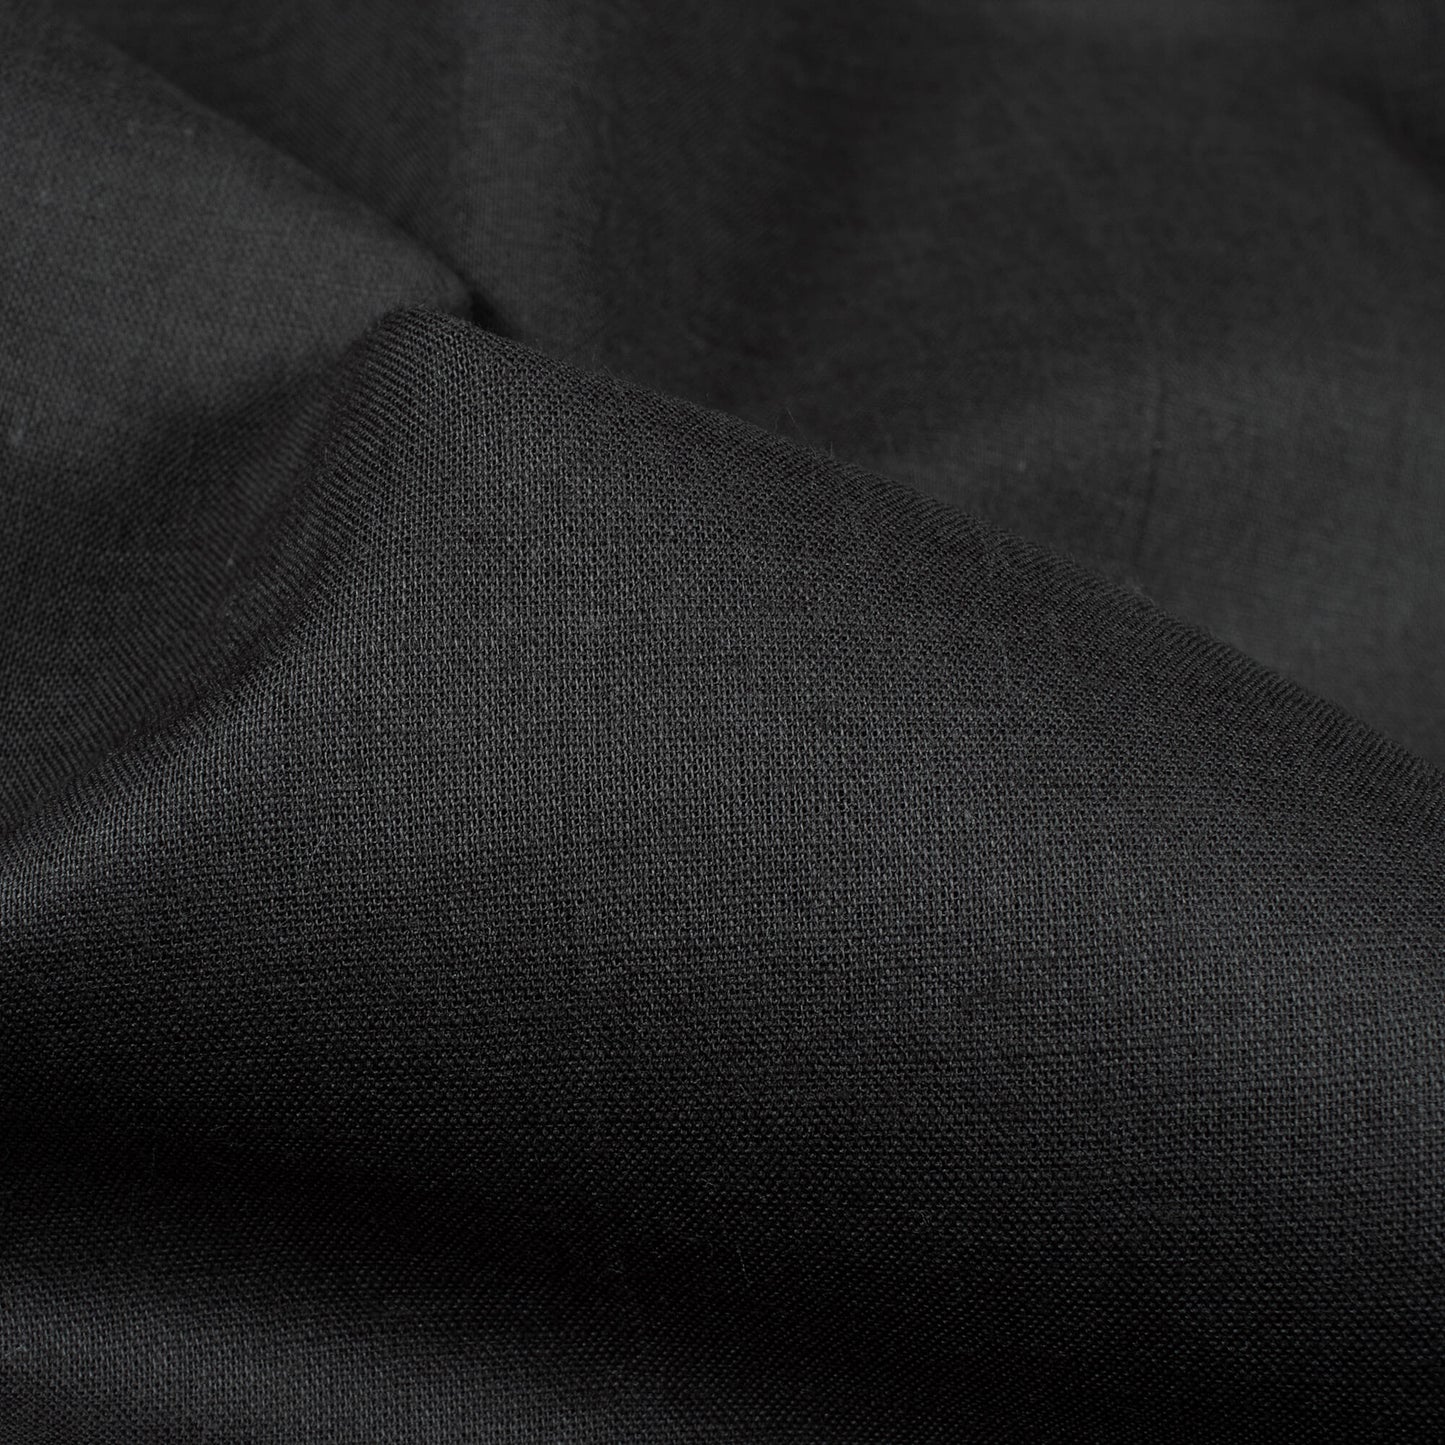 Jet Black Plain Cotton Cambric Fabric